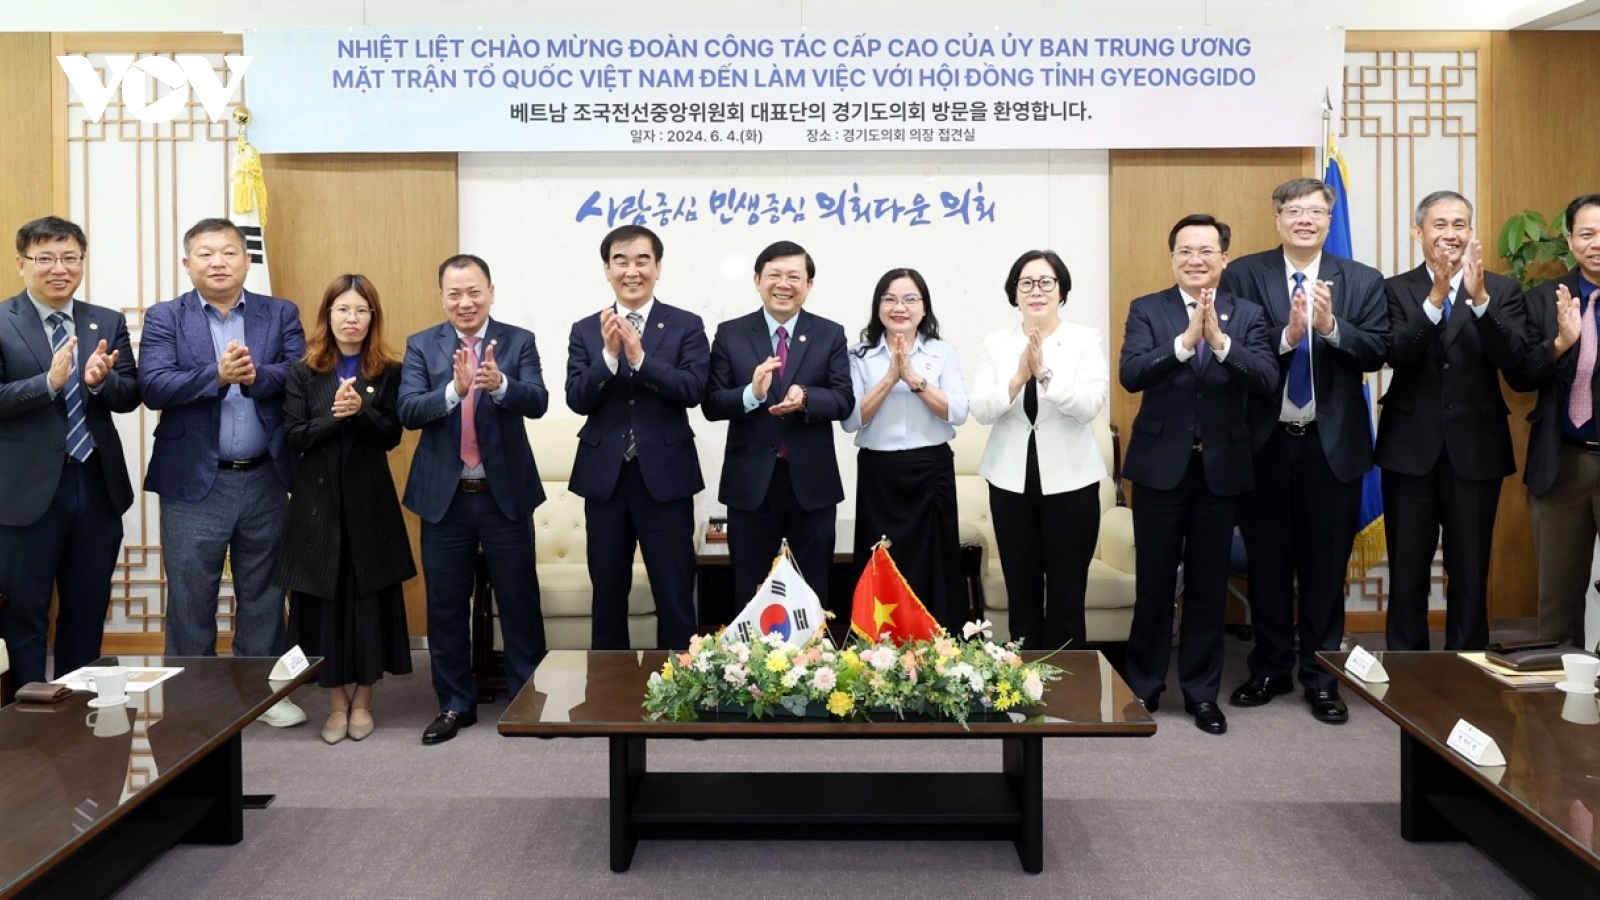 Promoting friendly cooperative relations between Vietnam and RoK